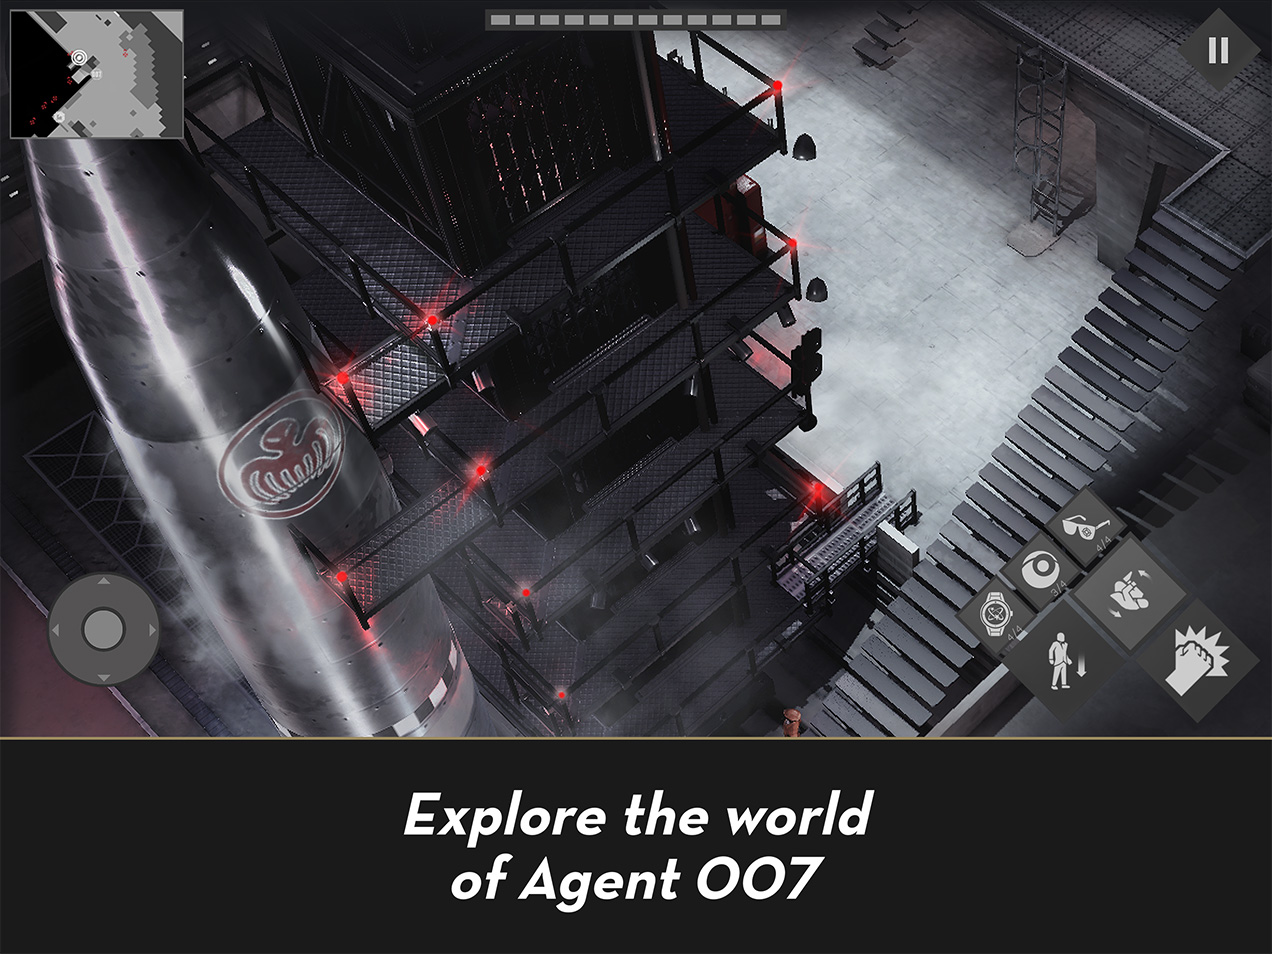 New James Bond game Cyber 007 coming to Apple Arcade world blofeld